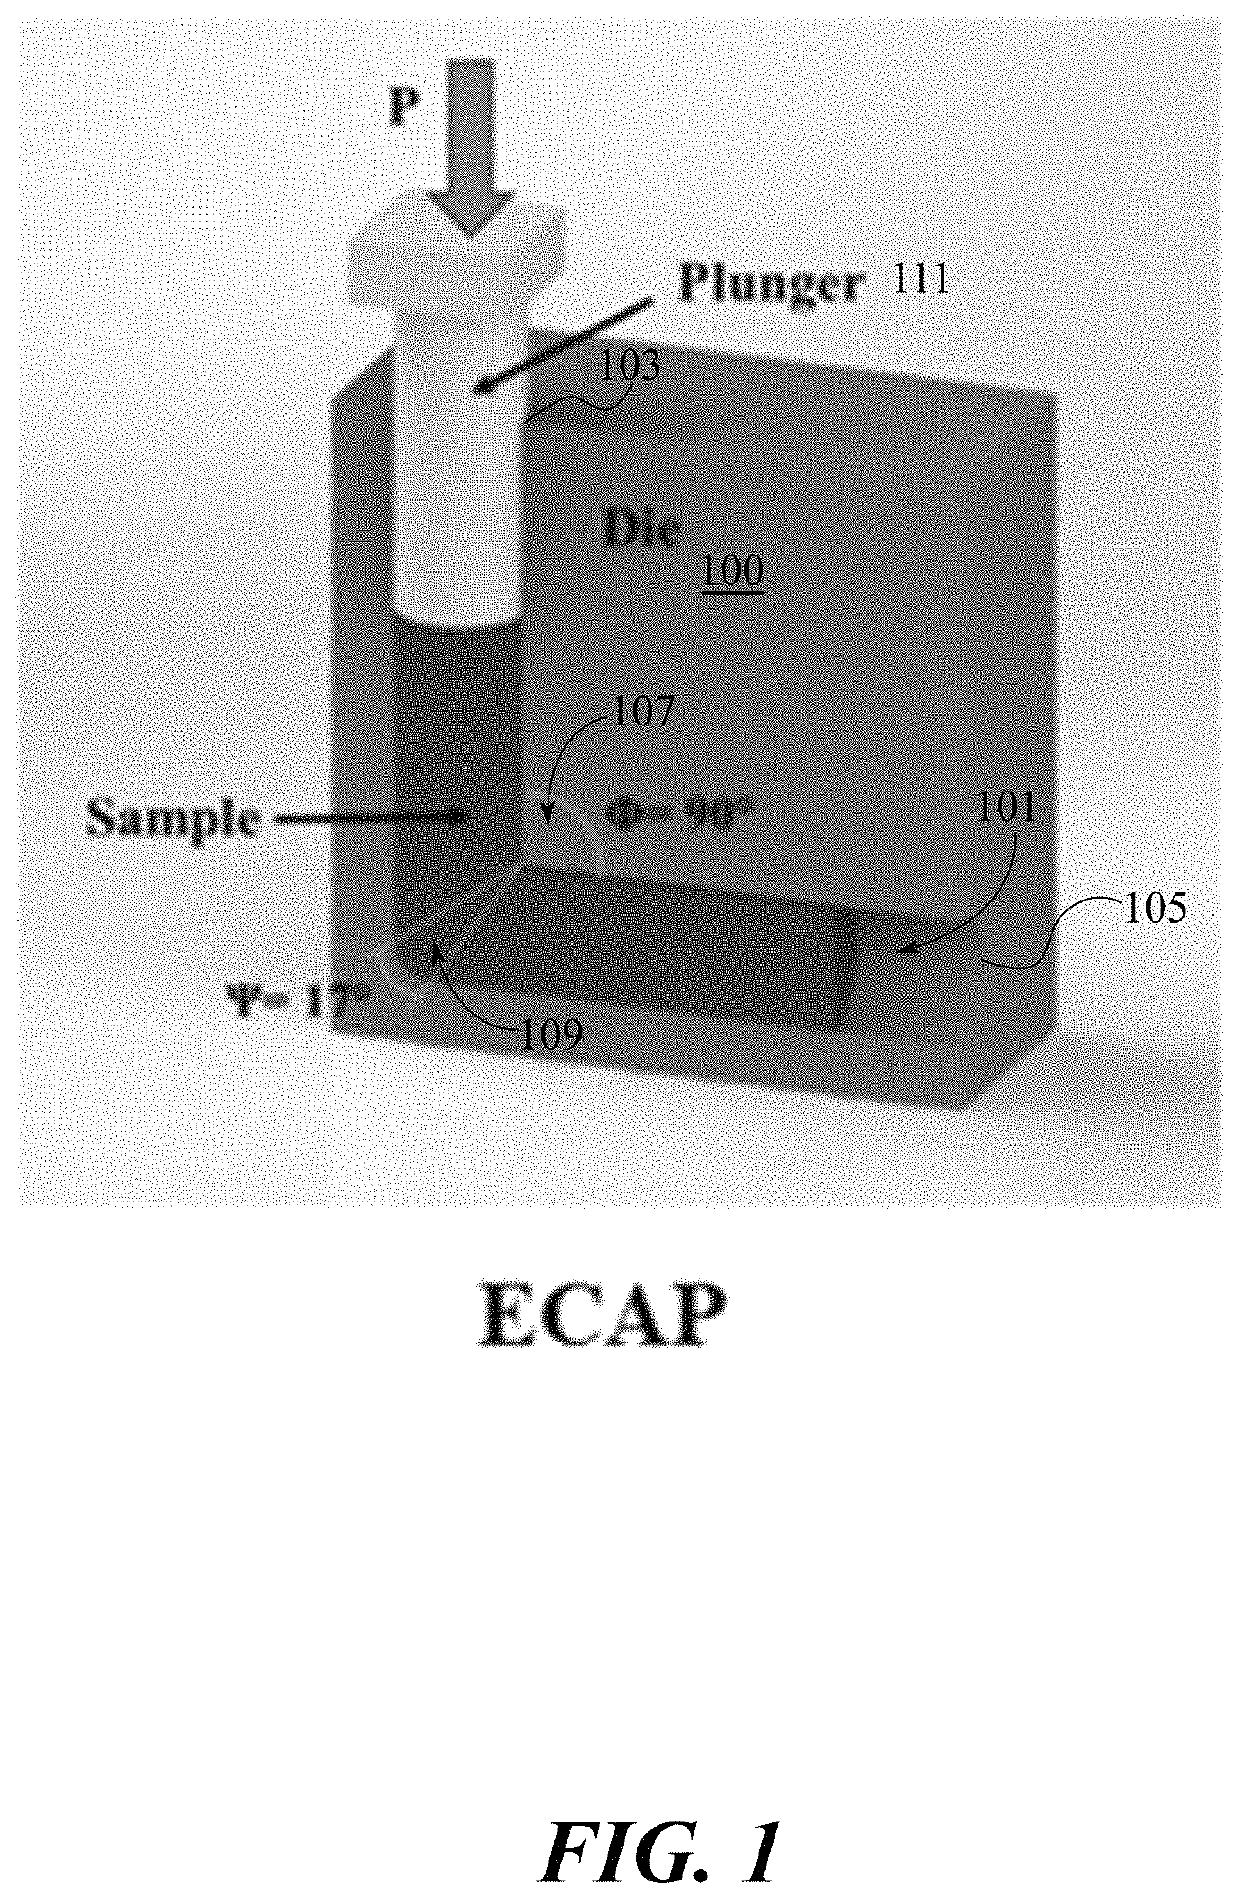 Method of modifying surface biocompatibility of a titanium medical implant